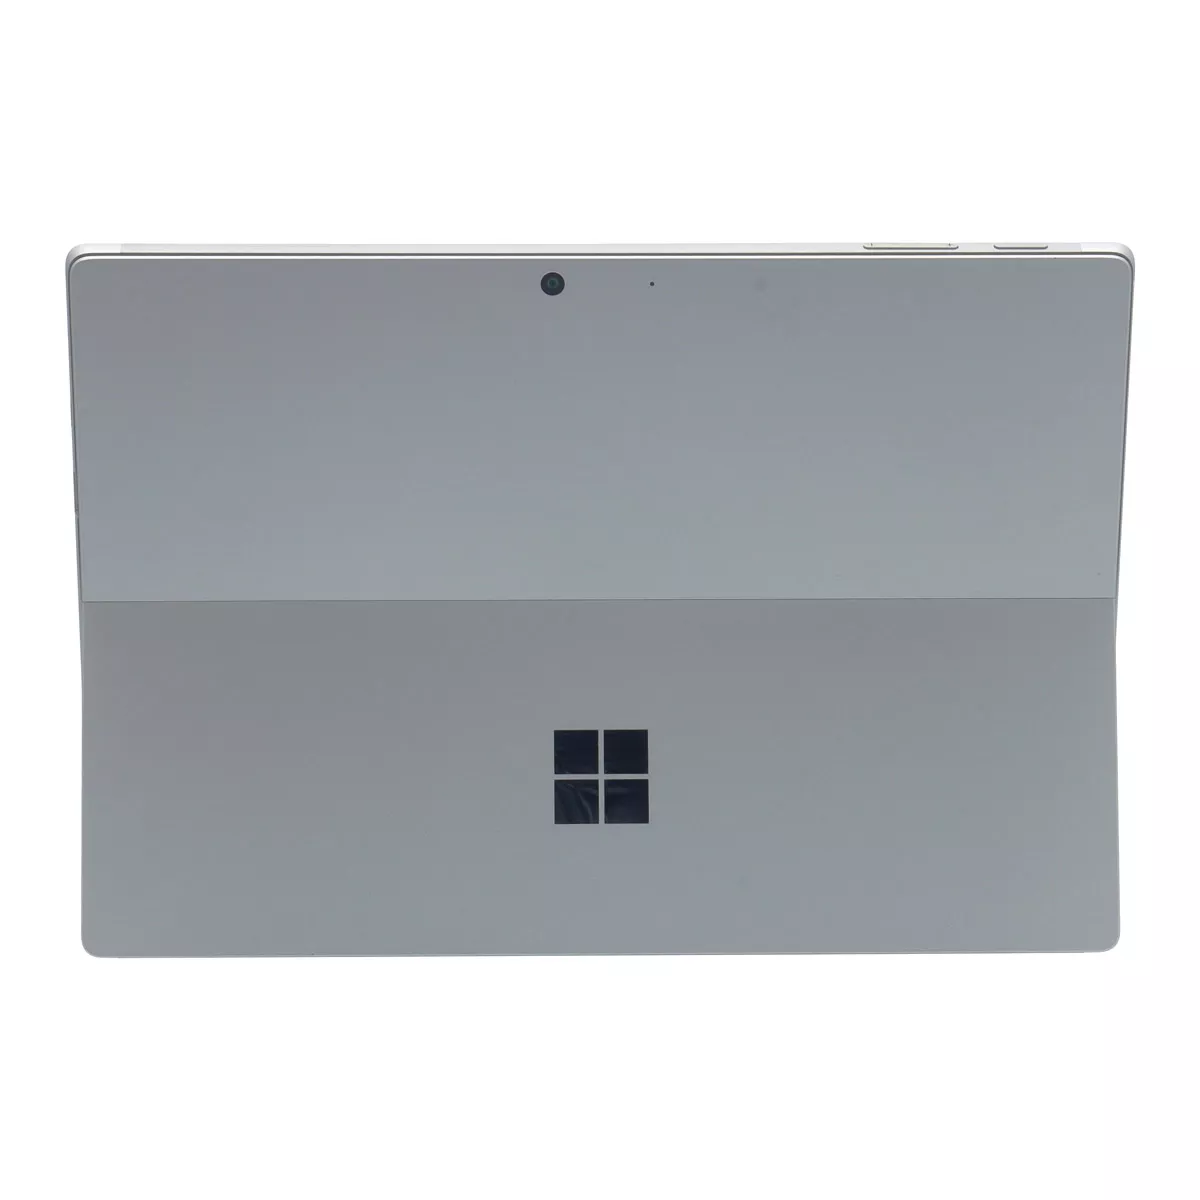 Microsoft Surface Pro 7 Core i5 1035G4 8 GB 128 GB SSD Webcam B